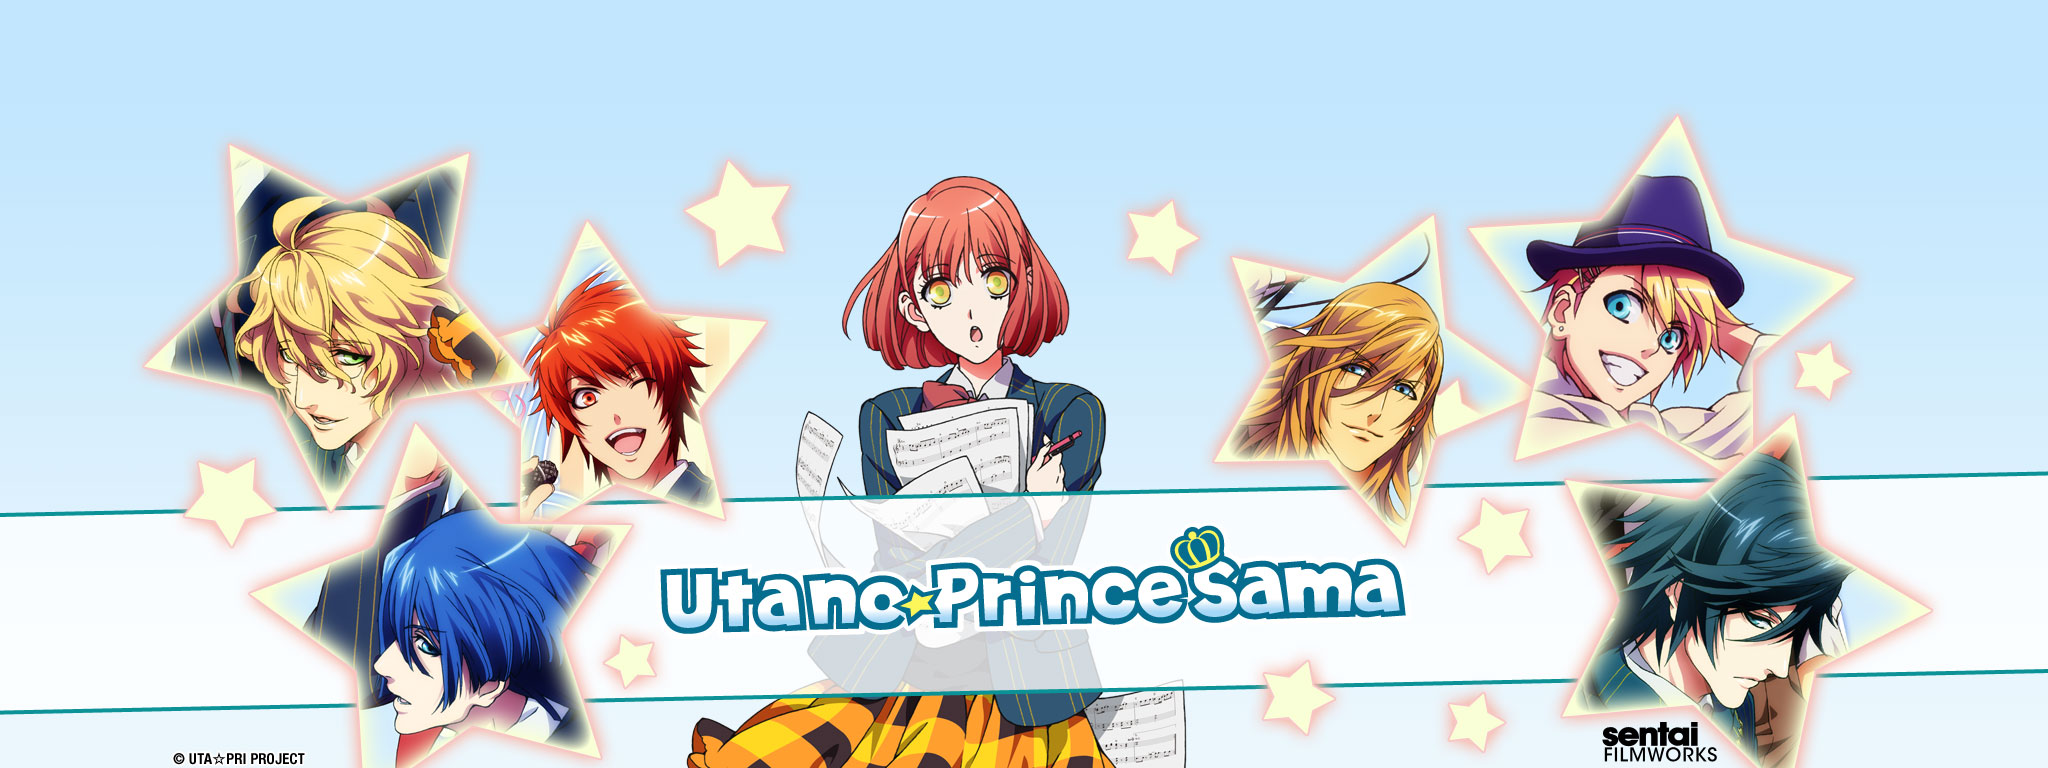 Title Art for Utano Prince Sama 1000%